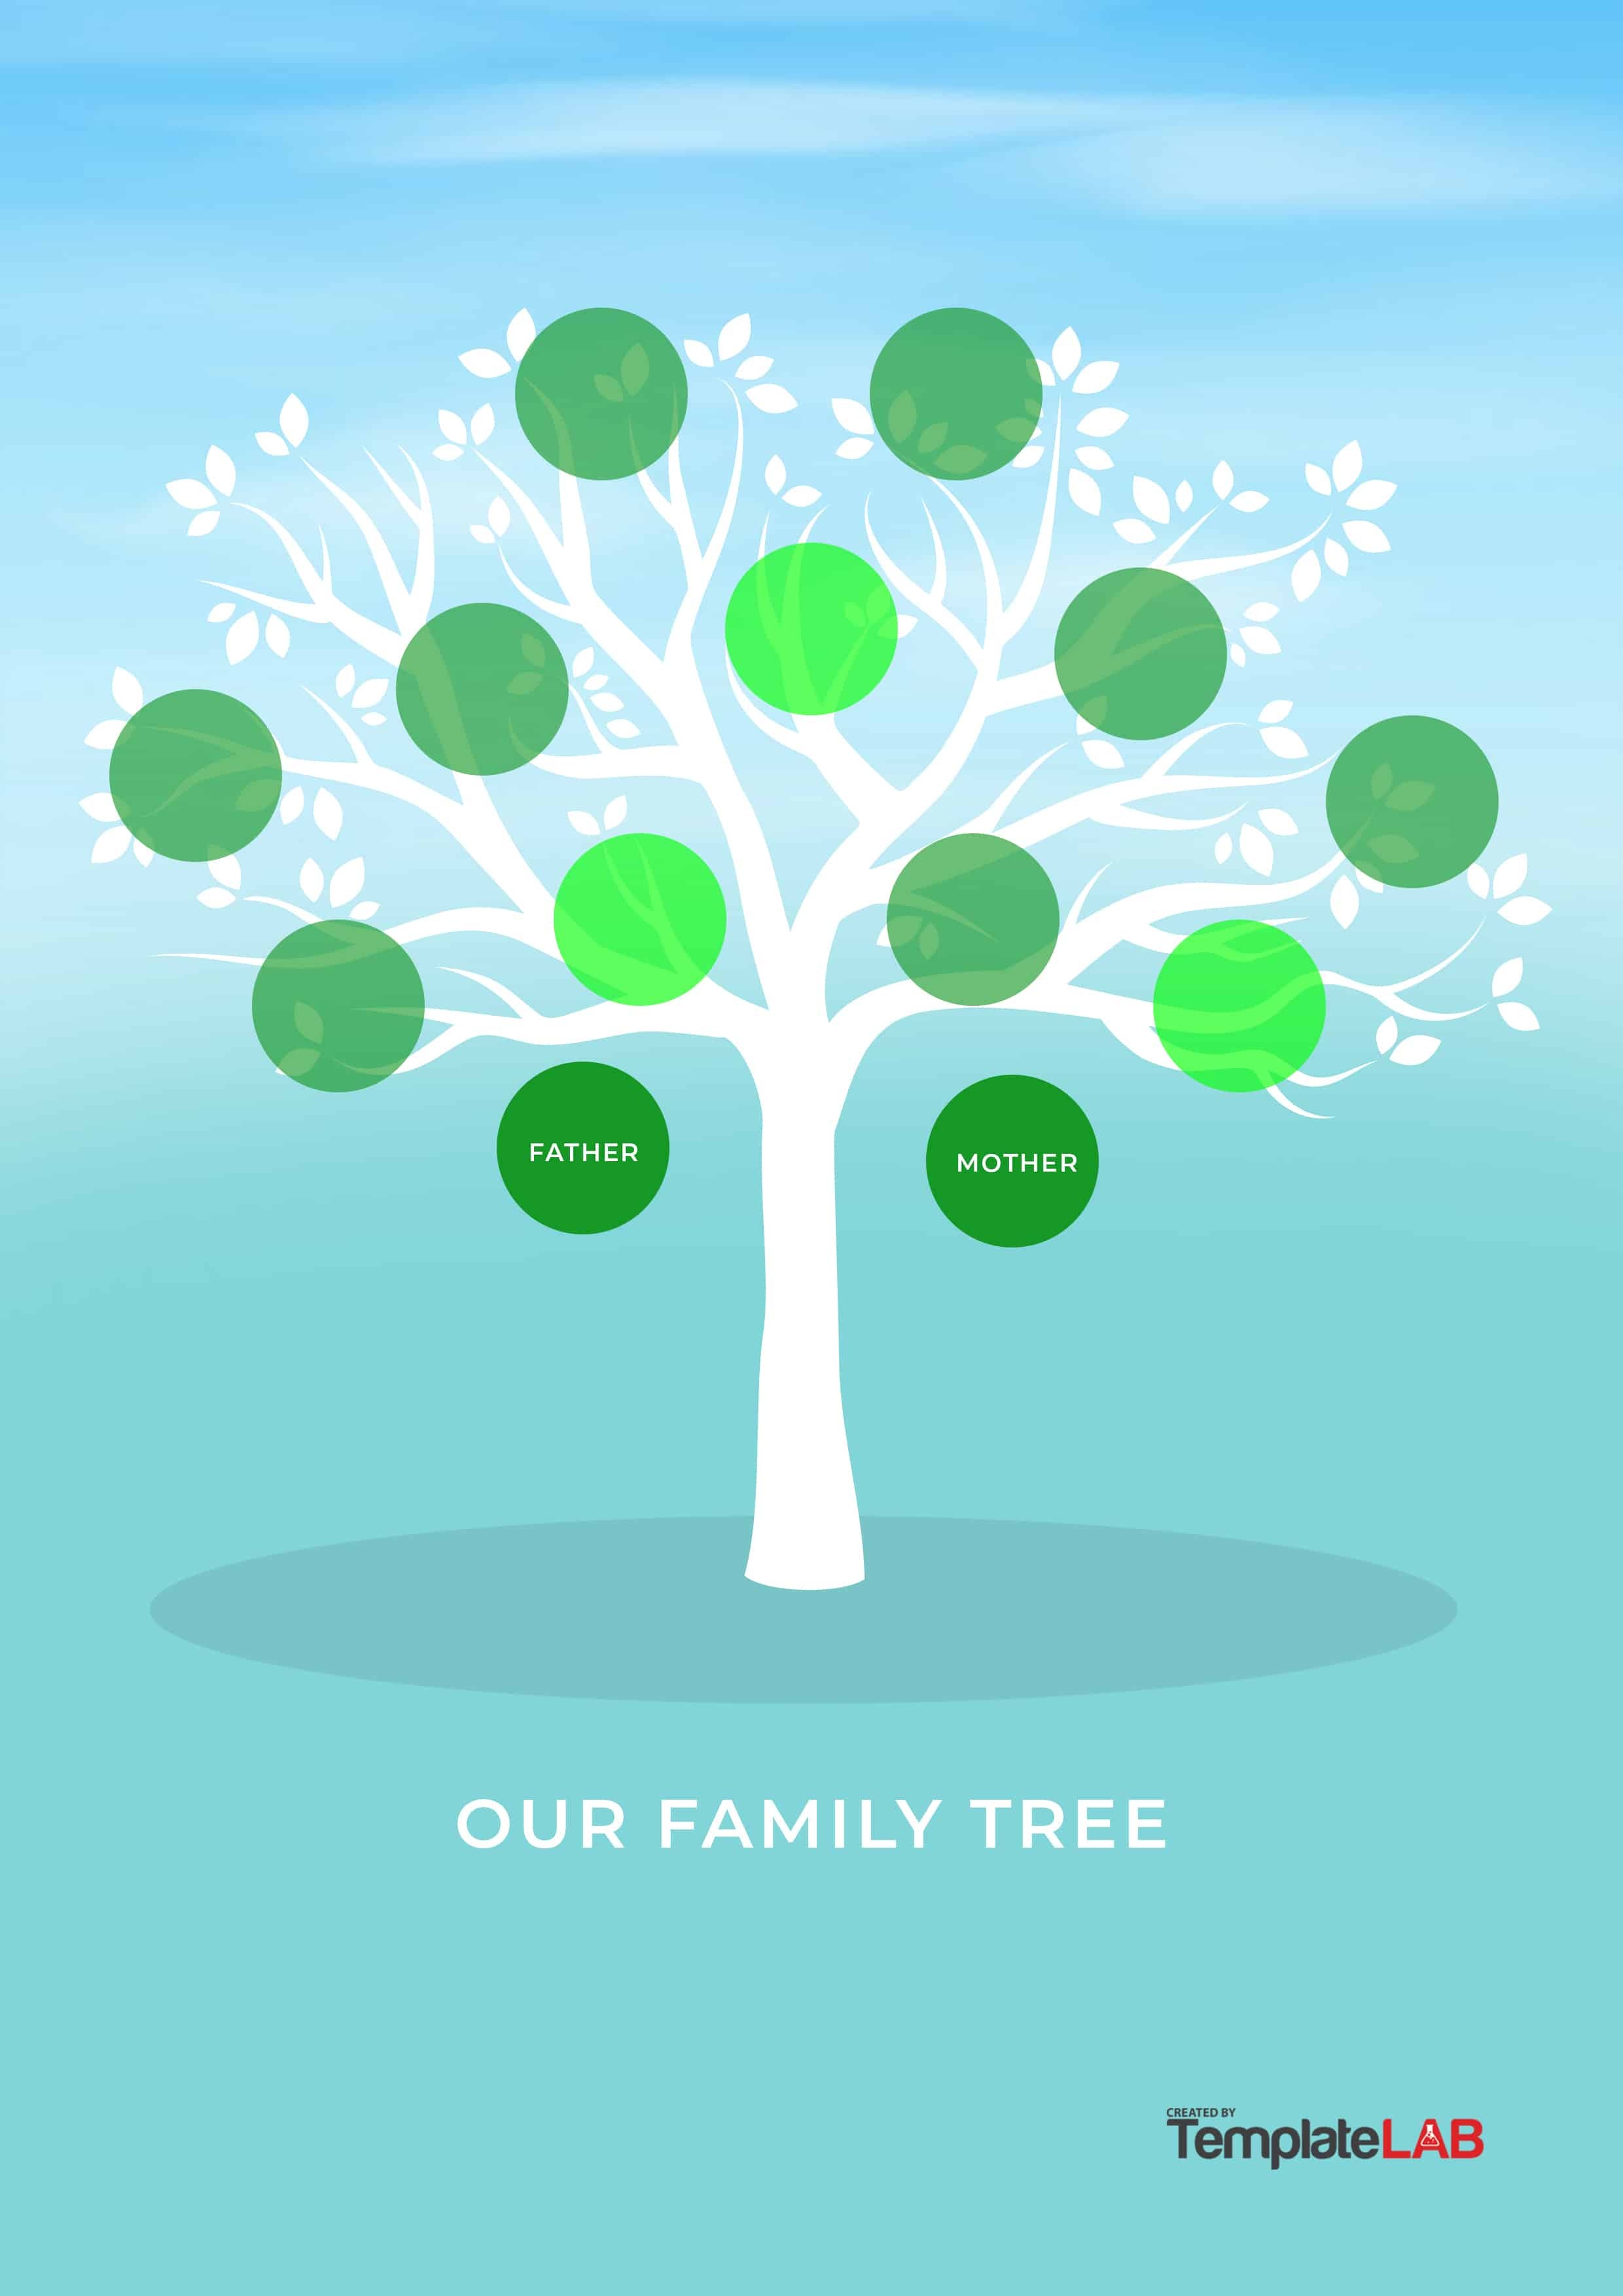 50+ Free Family Tree Templates (Word, Excel, Pdf) ᐅ Template Lab - Free Printable Family Tree Template